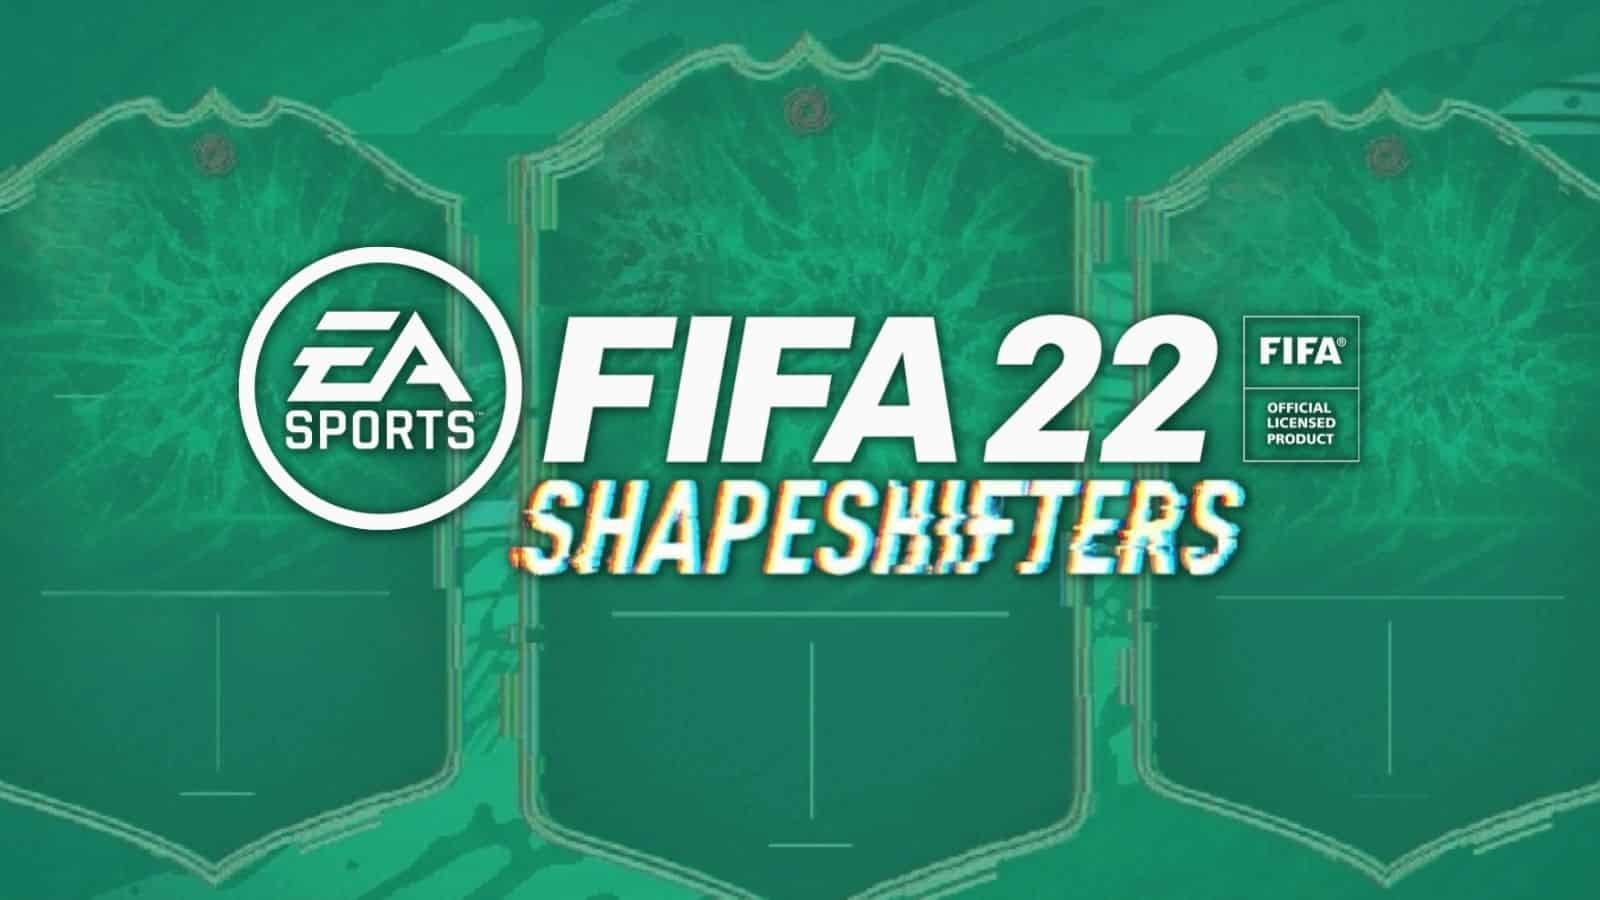 FIFA 22 Zmiennokształtni